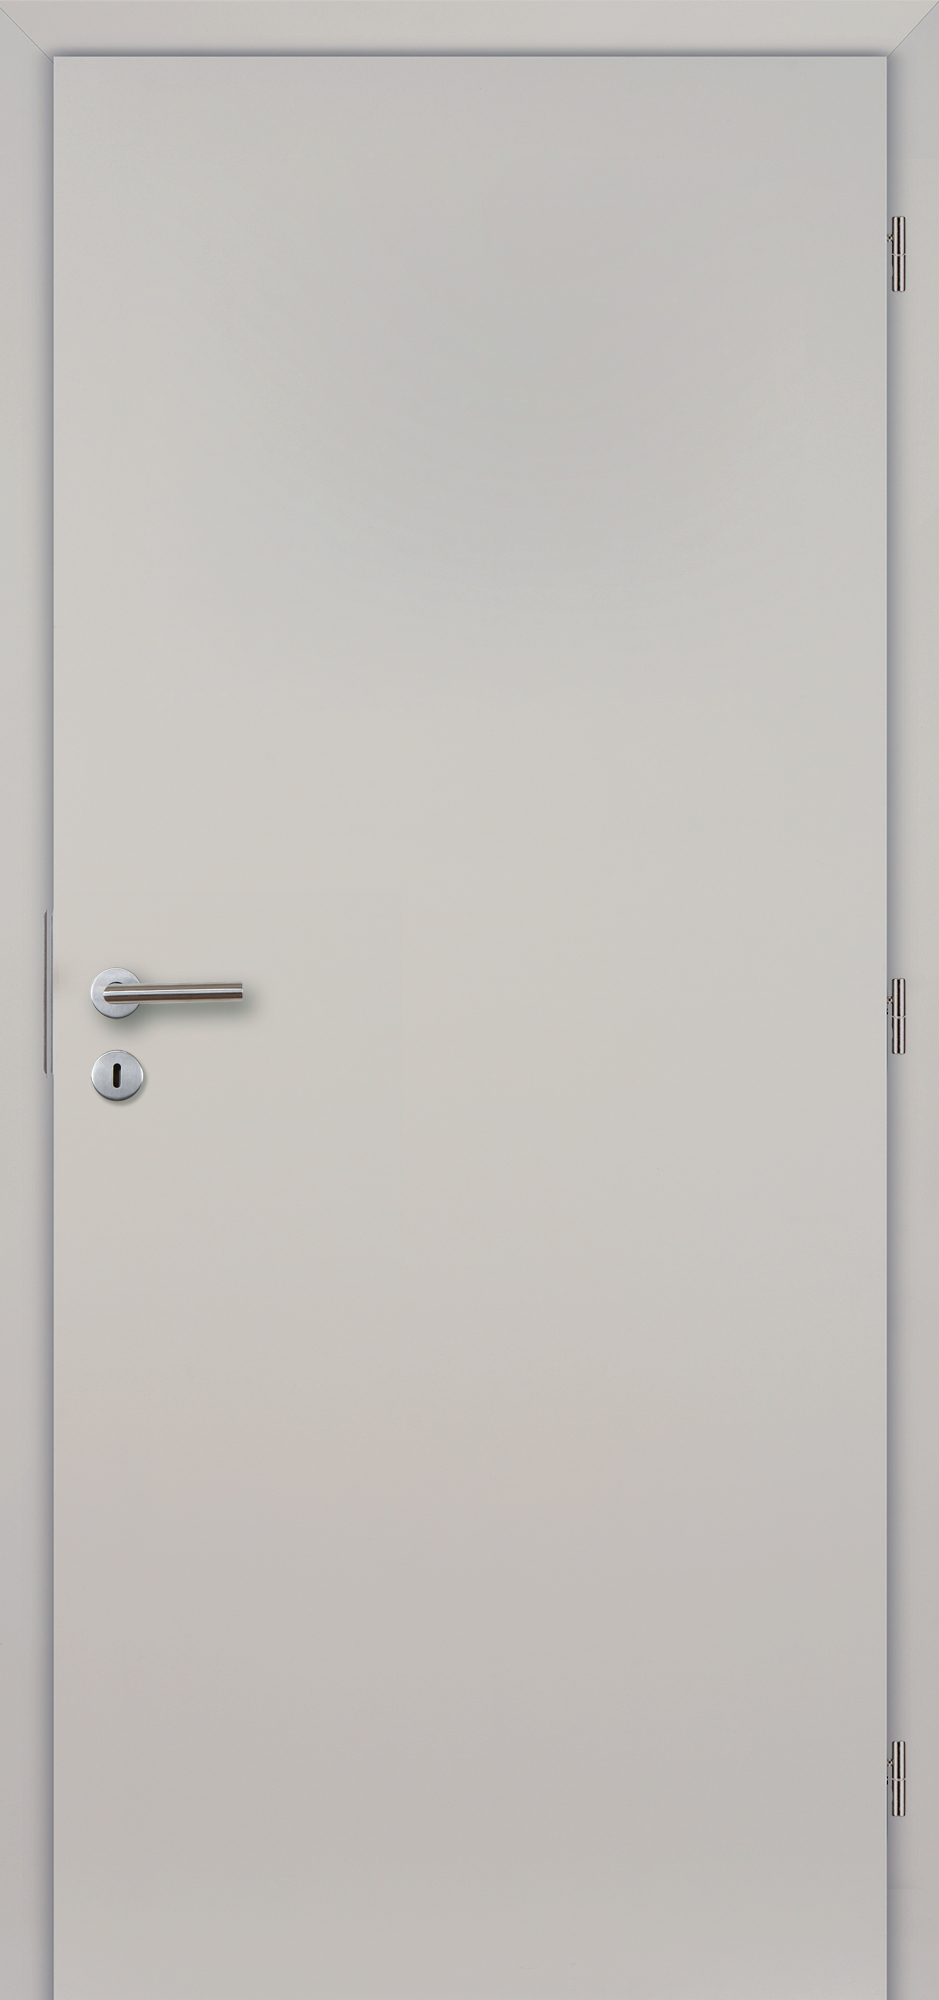 Dveře interiérové protipožární Doornite LUME EXTRA dub šedý kašír pravá 900 mm